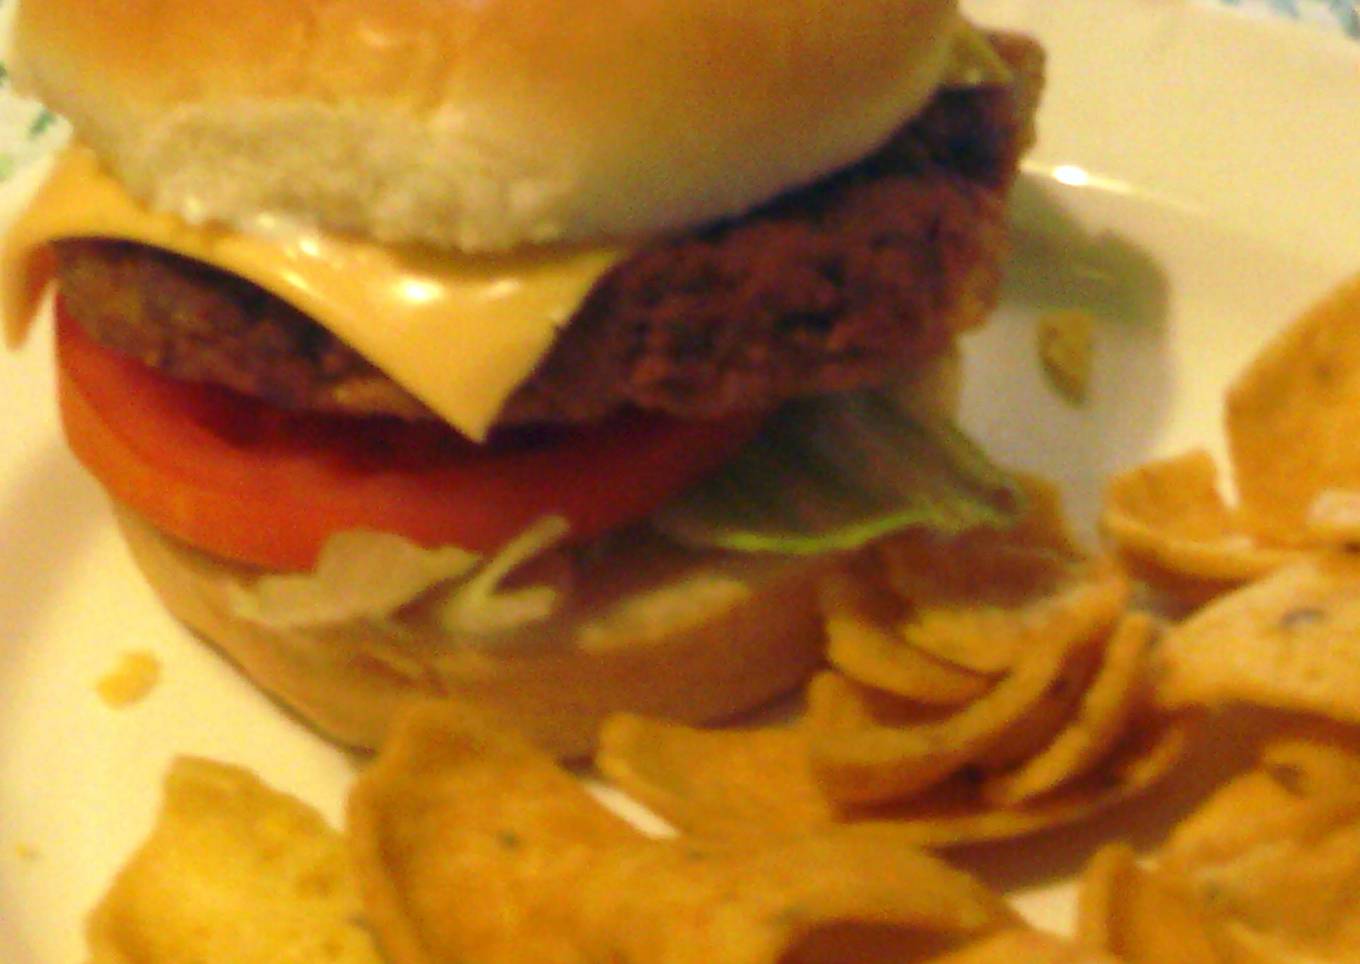 Chickpea &Salmon Patty burgers